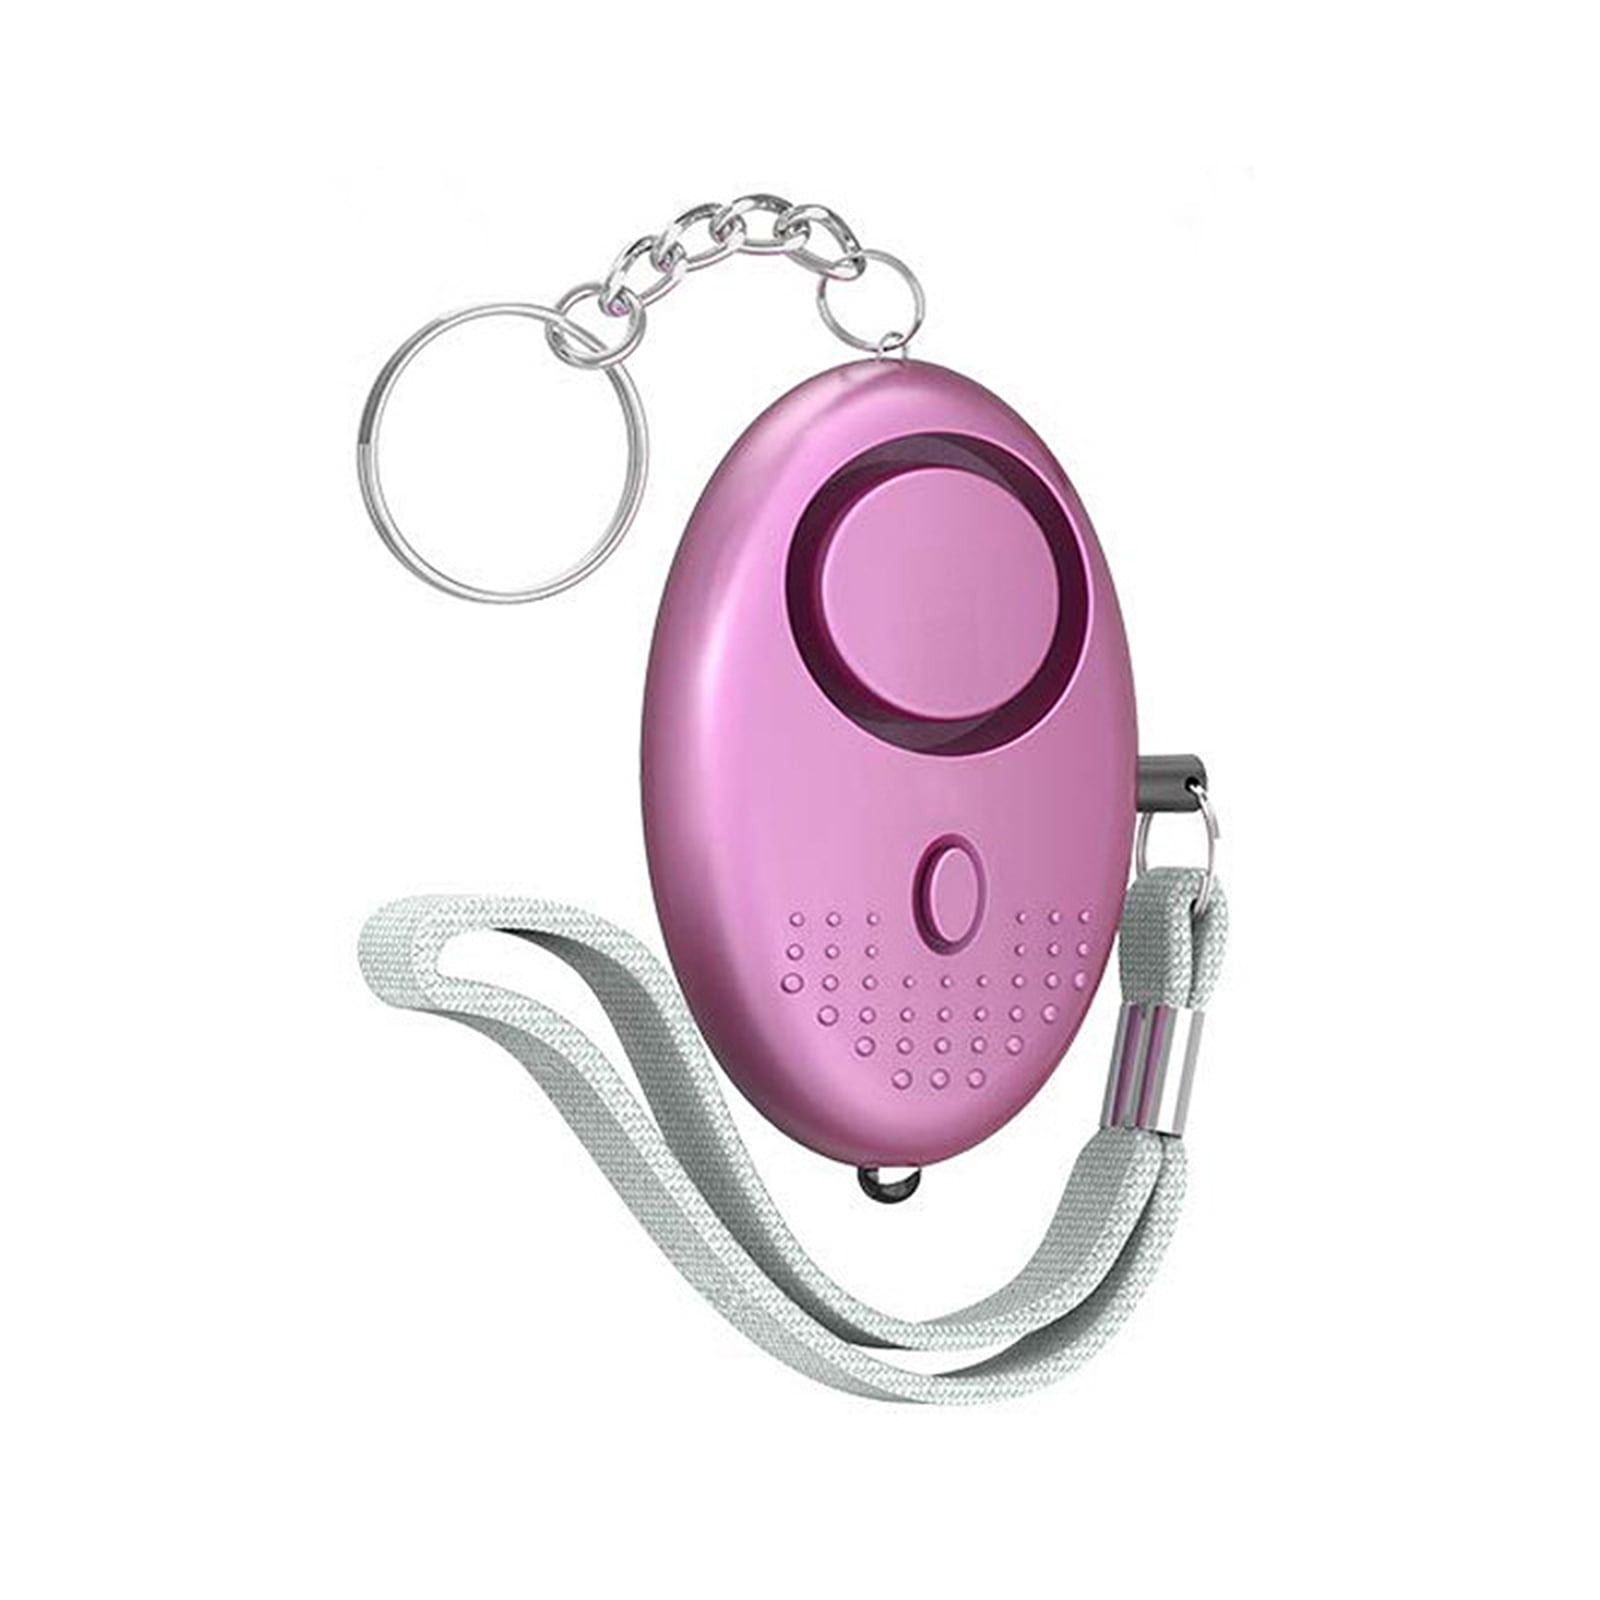 Safe 130dB Sound personal Alarm Emergency Self-defense Attack Anti-Rape Keychain